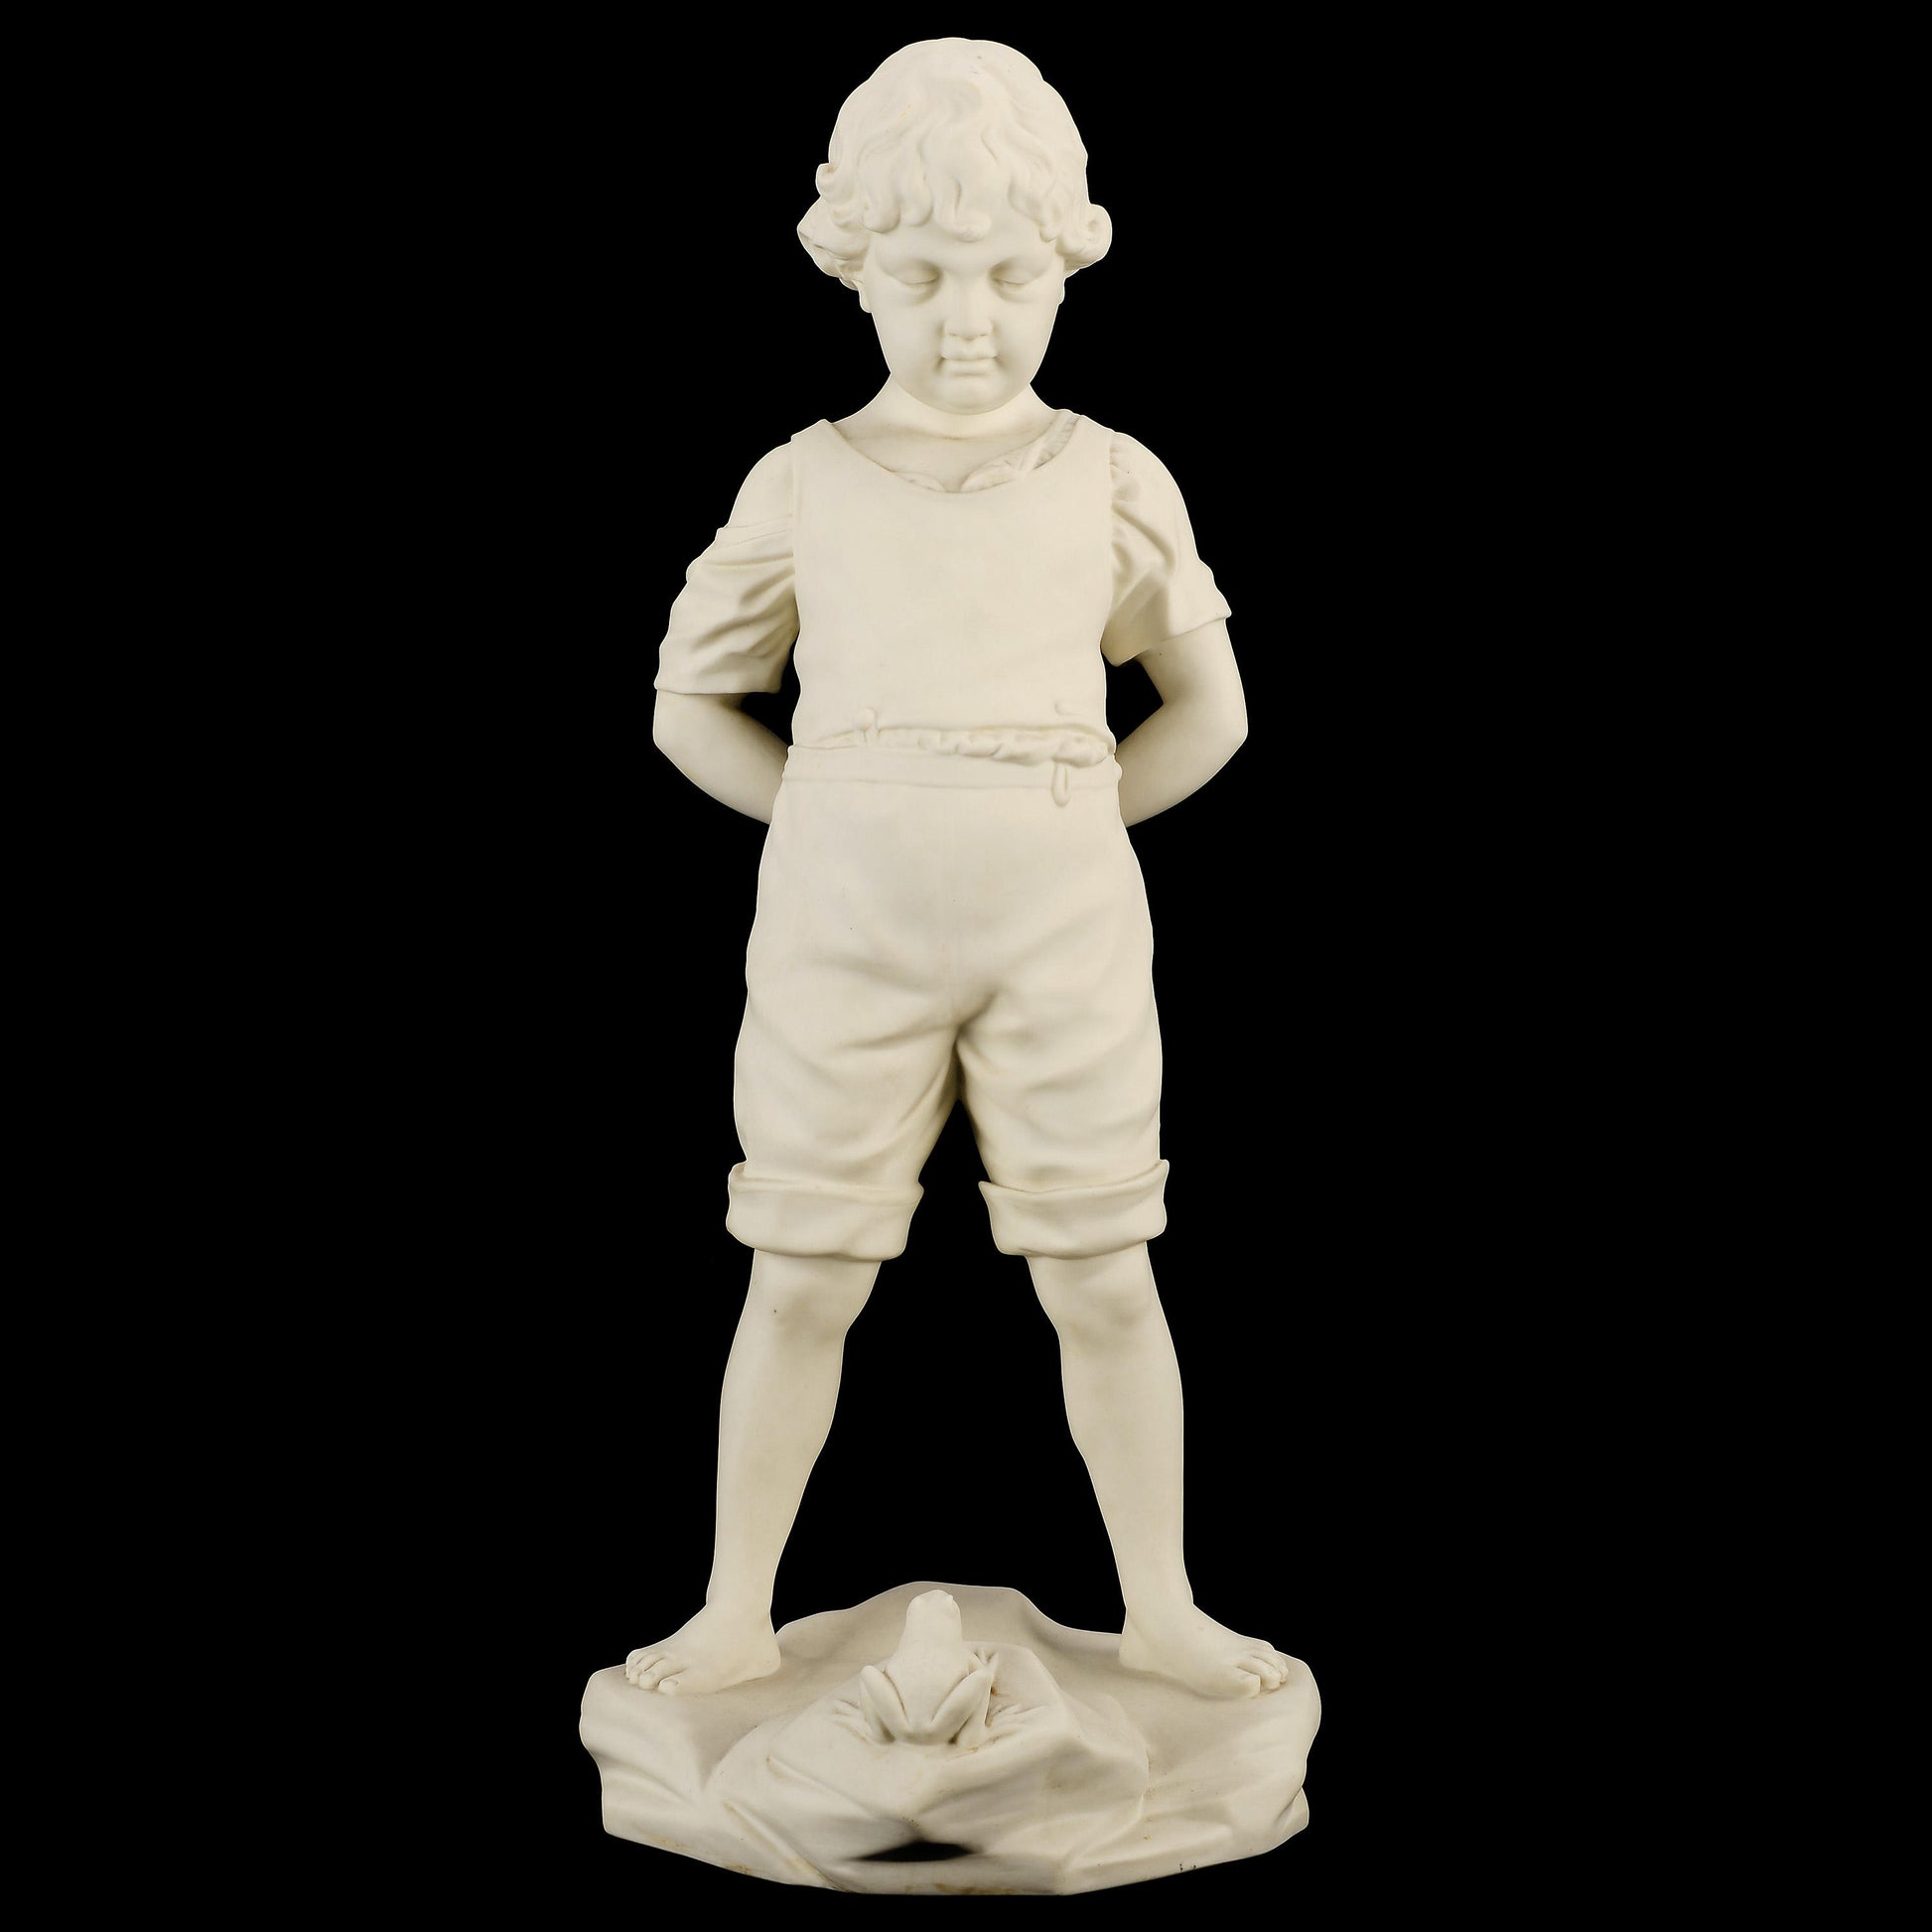 Parianfigurin från Gustavsberg, "Pojken och Grodan". 49cm hög. Märkt GUSTAVSBERG 1922. Parian figurine, "Boy and the Frog" by Gustavsberg. H: 49cm/19,3". Marked GUSTAVSBERG 1922.